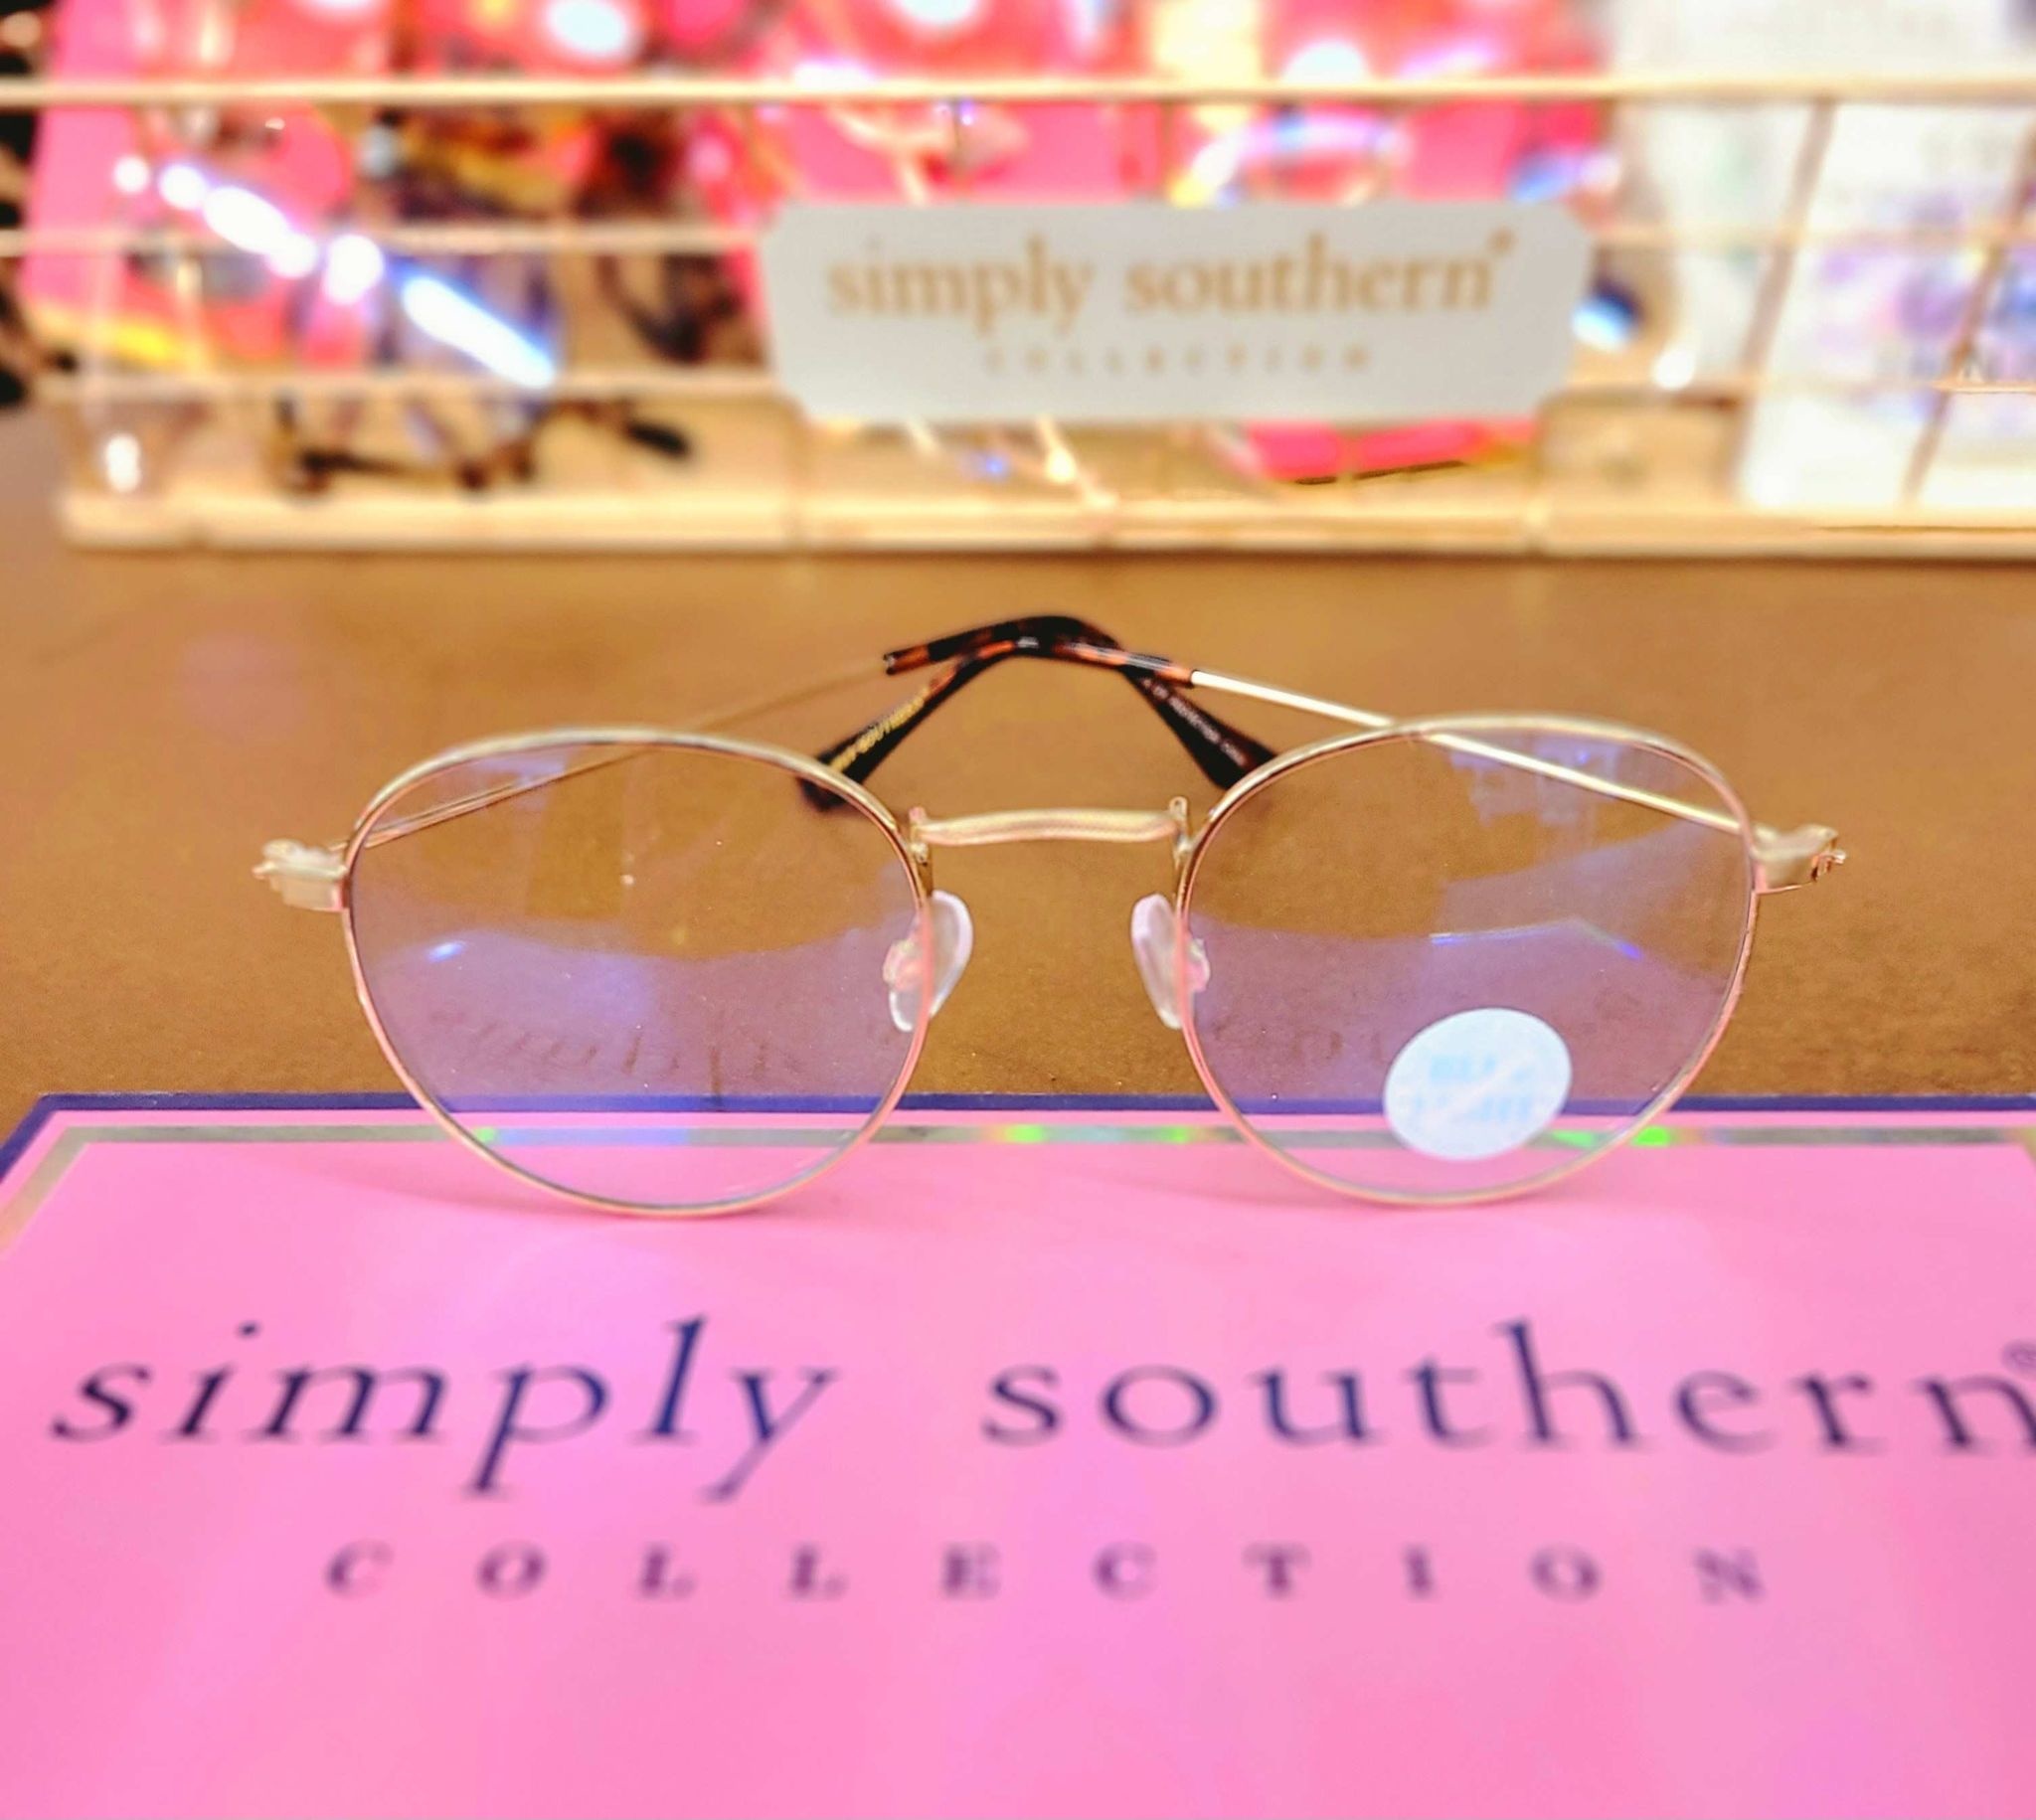 Simply Southern Blue Light Sunglasses, 001